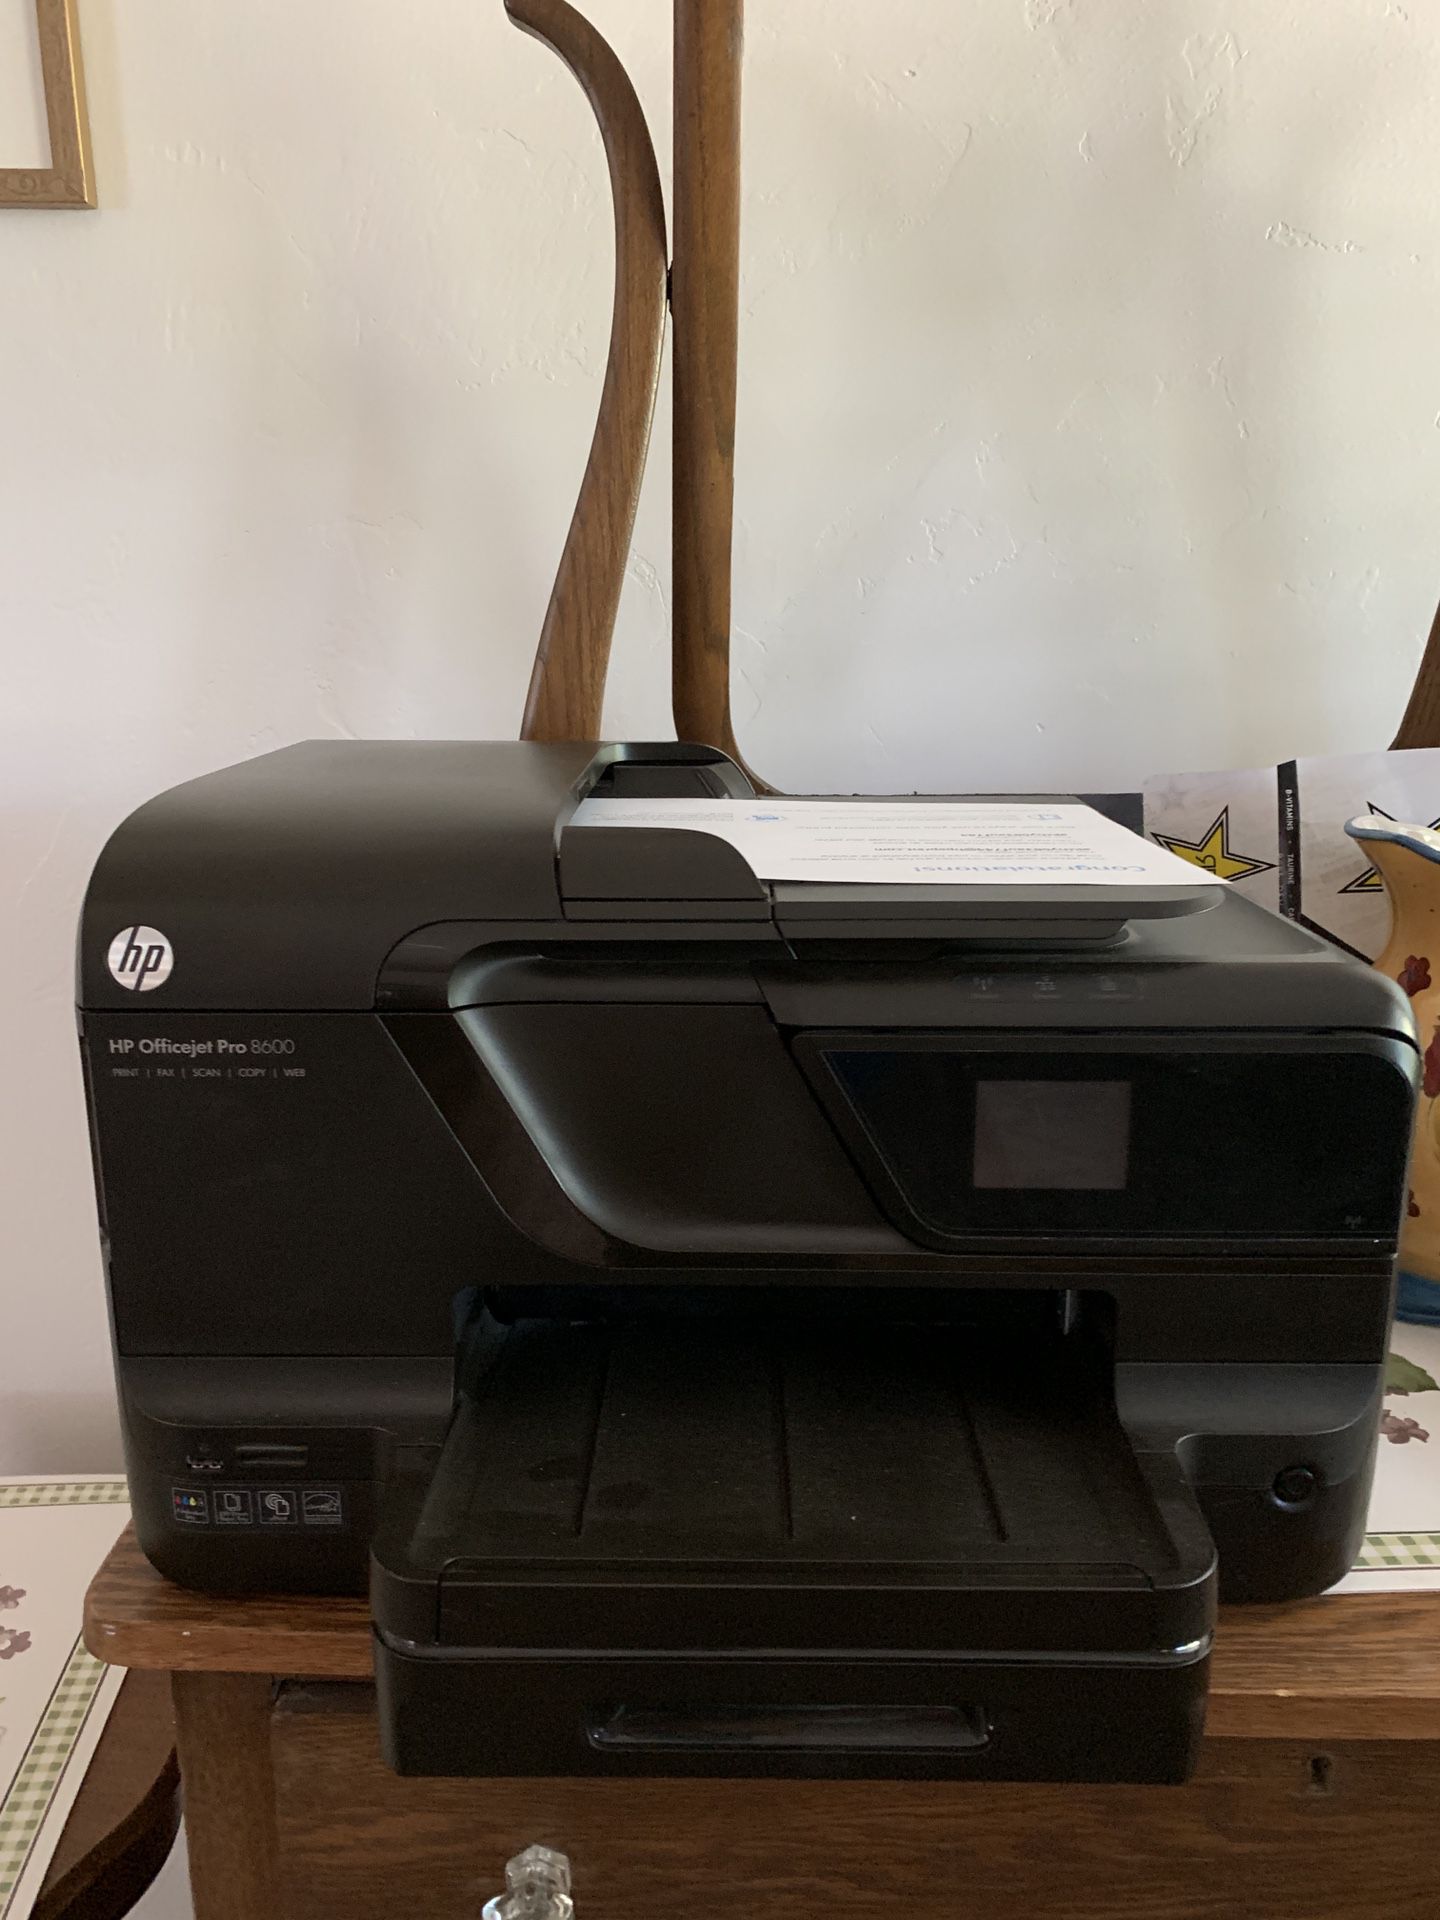 H P printer scanner